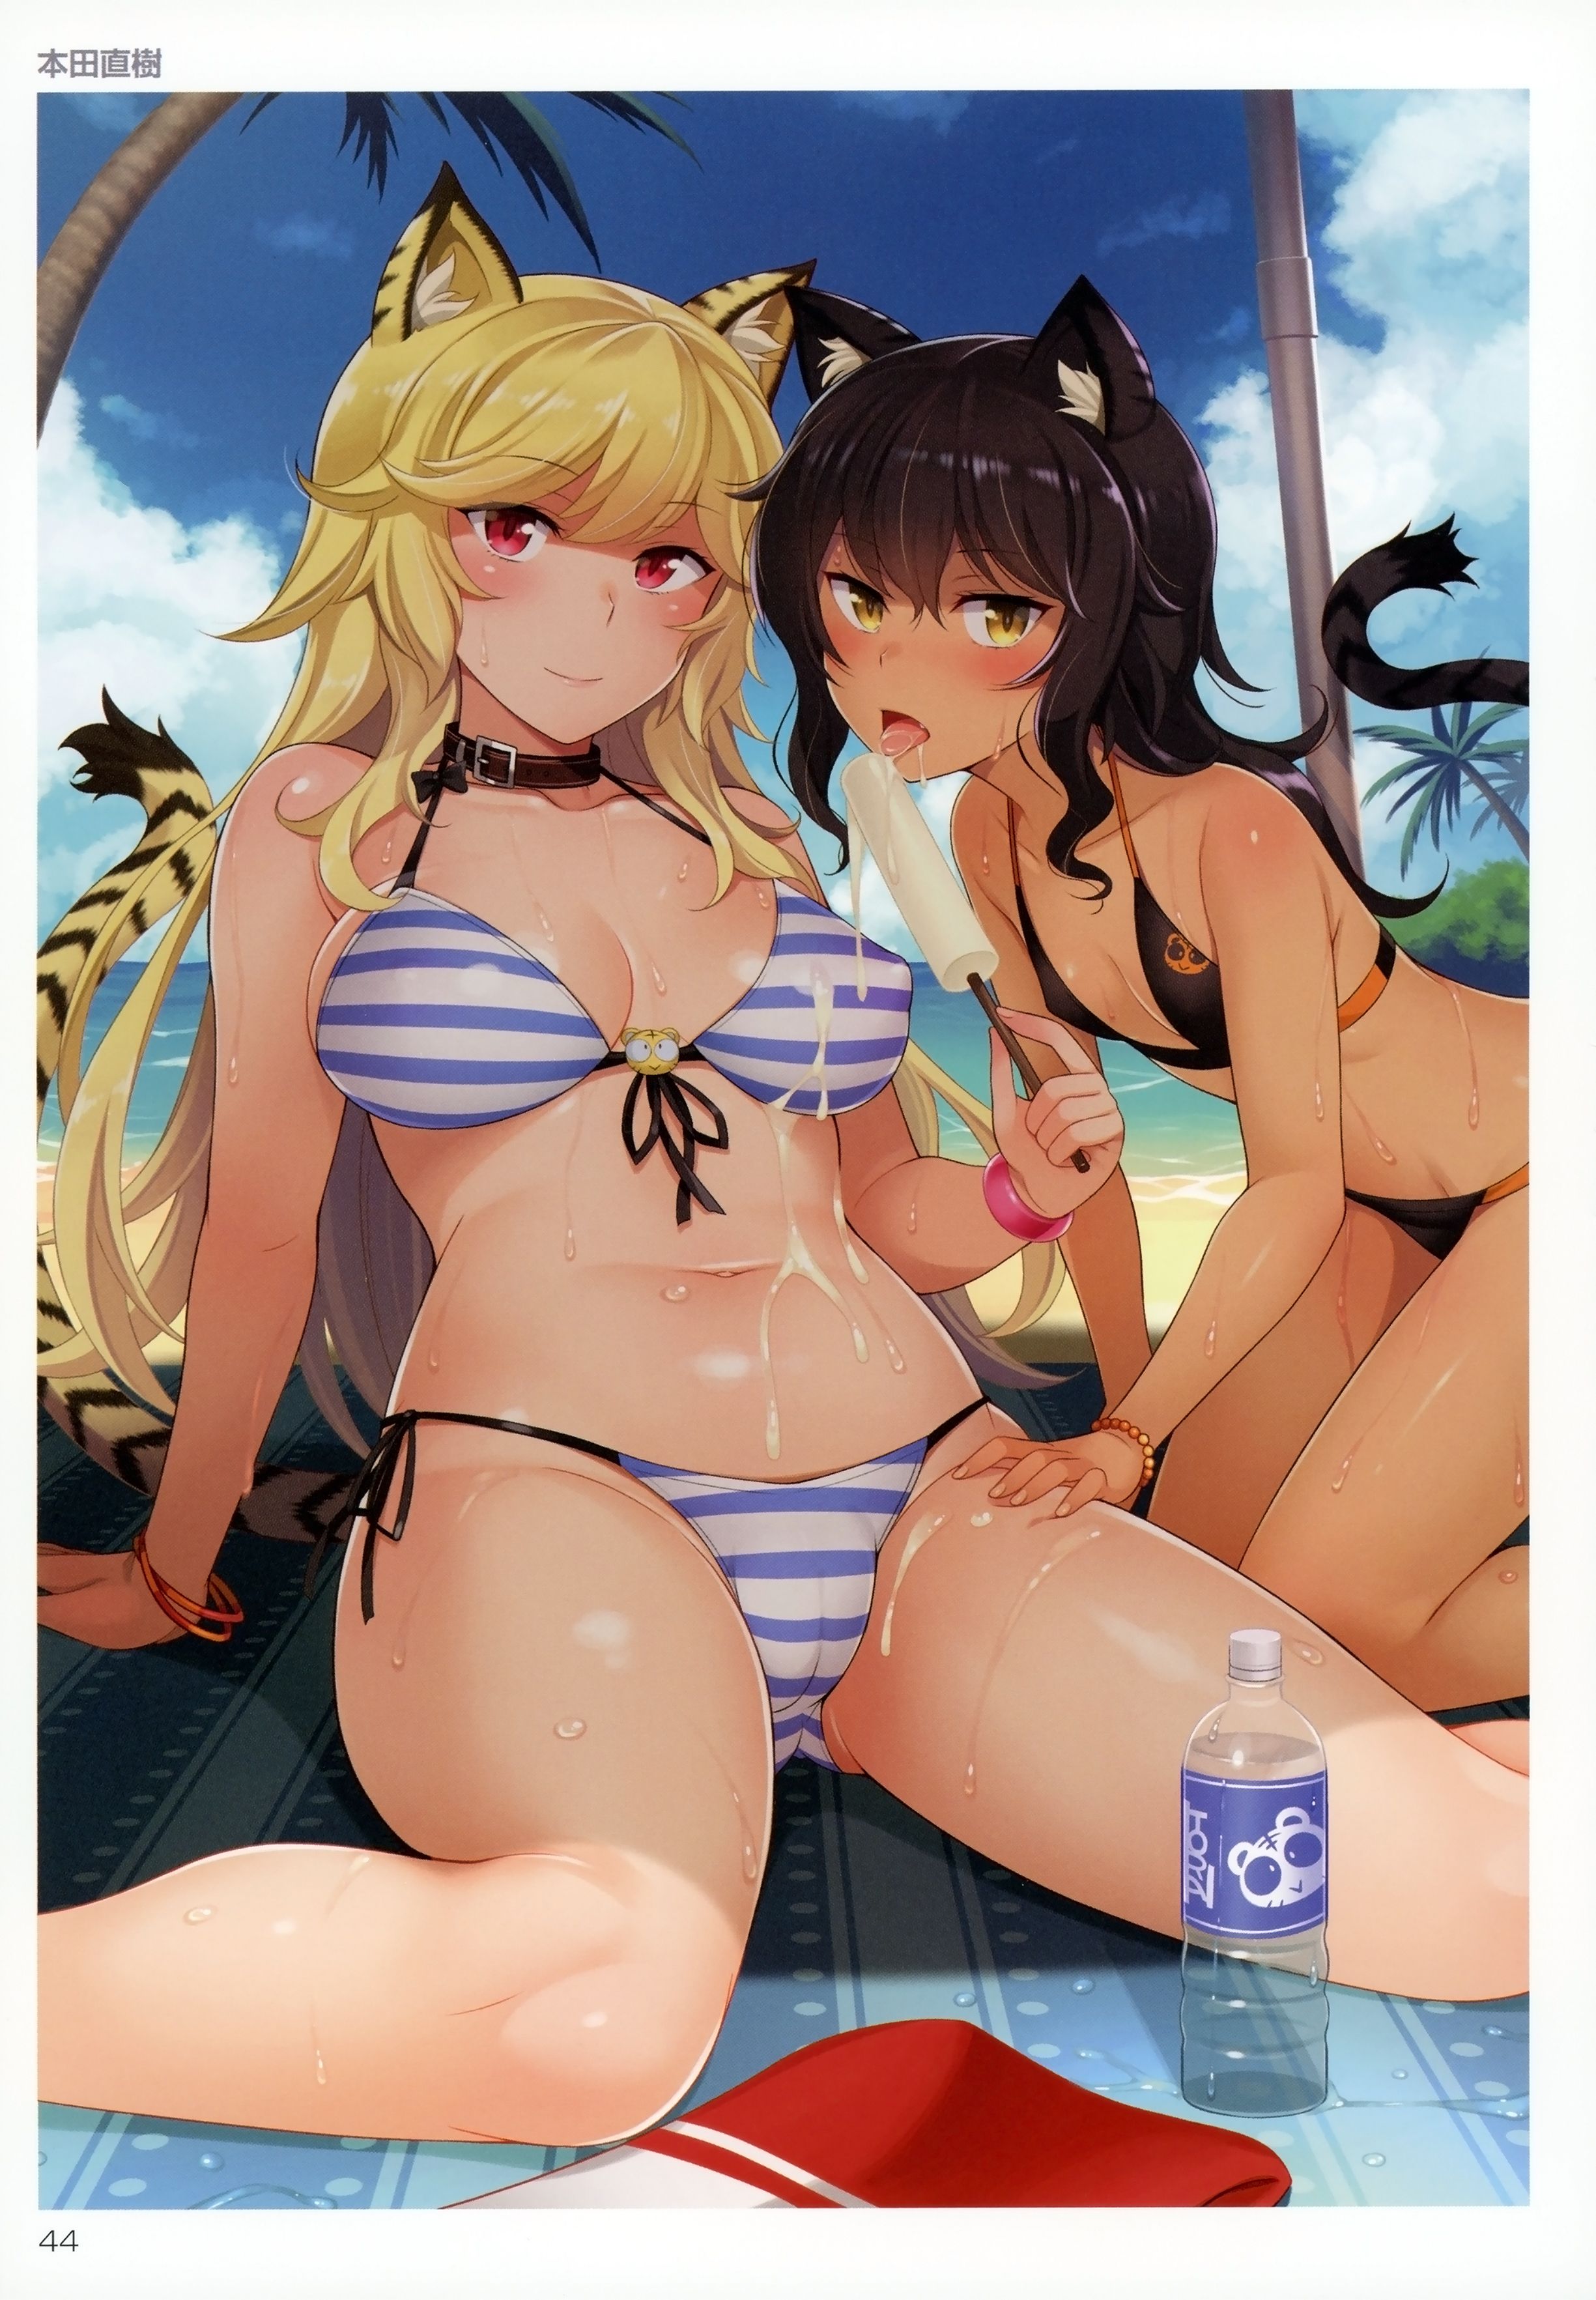 Erotic anime summary erotic images of beautiful girls wearing striped bikinis [50 photos] 9